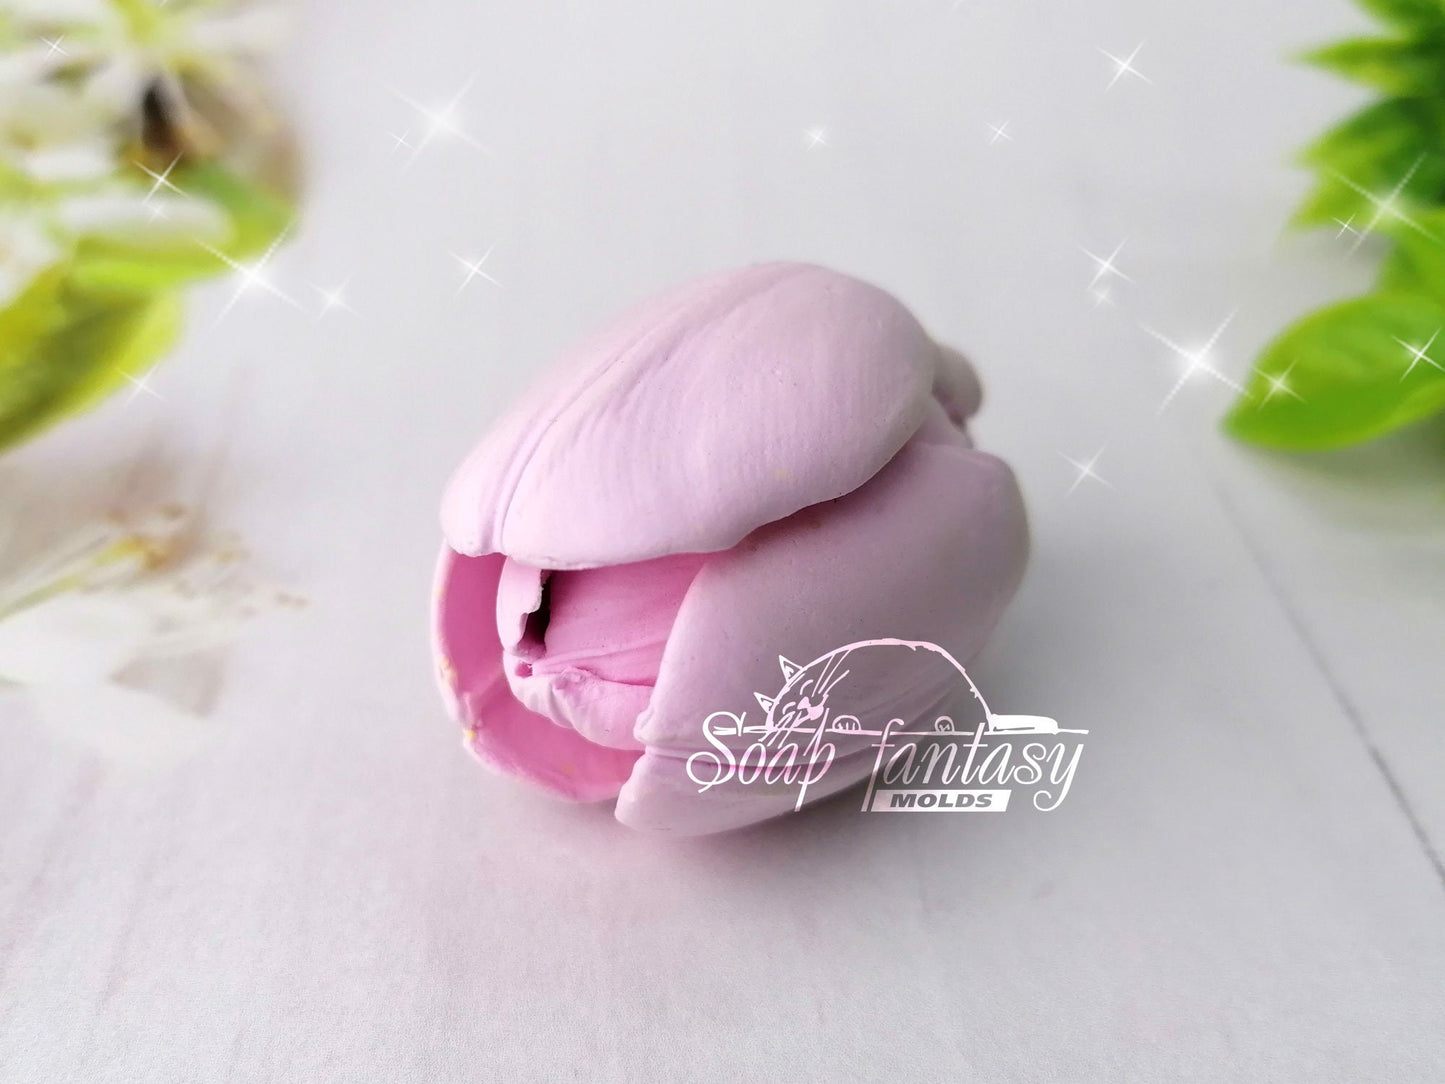 Mini tulip "Lima" silicone mold for soap making